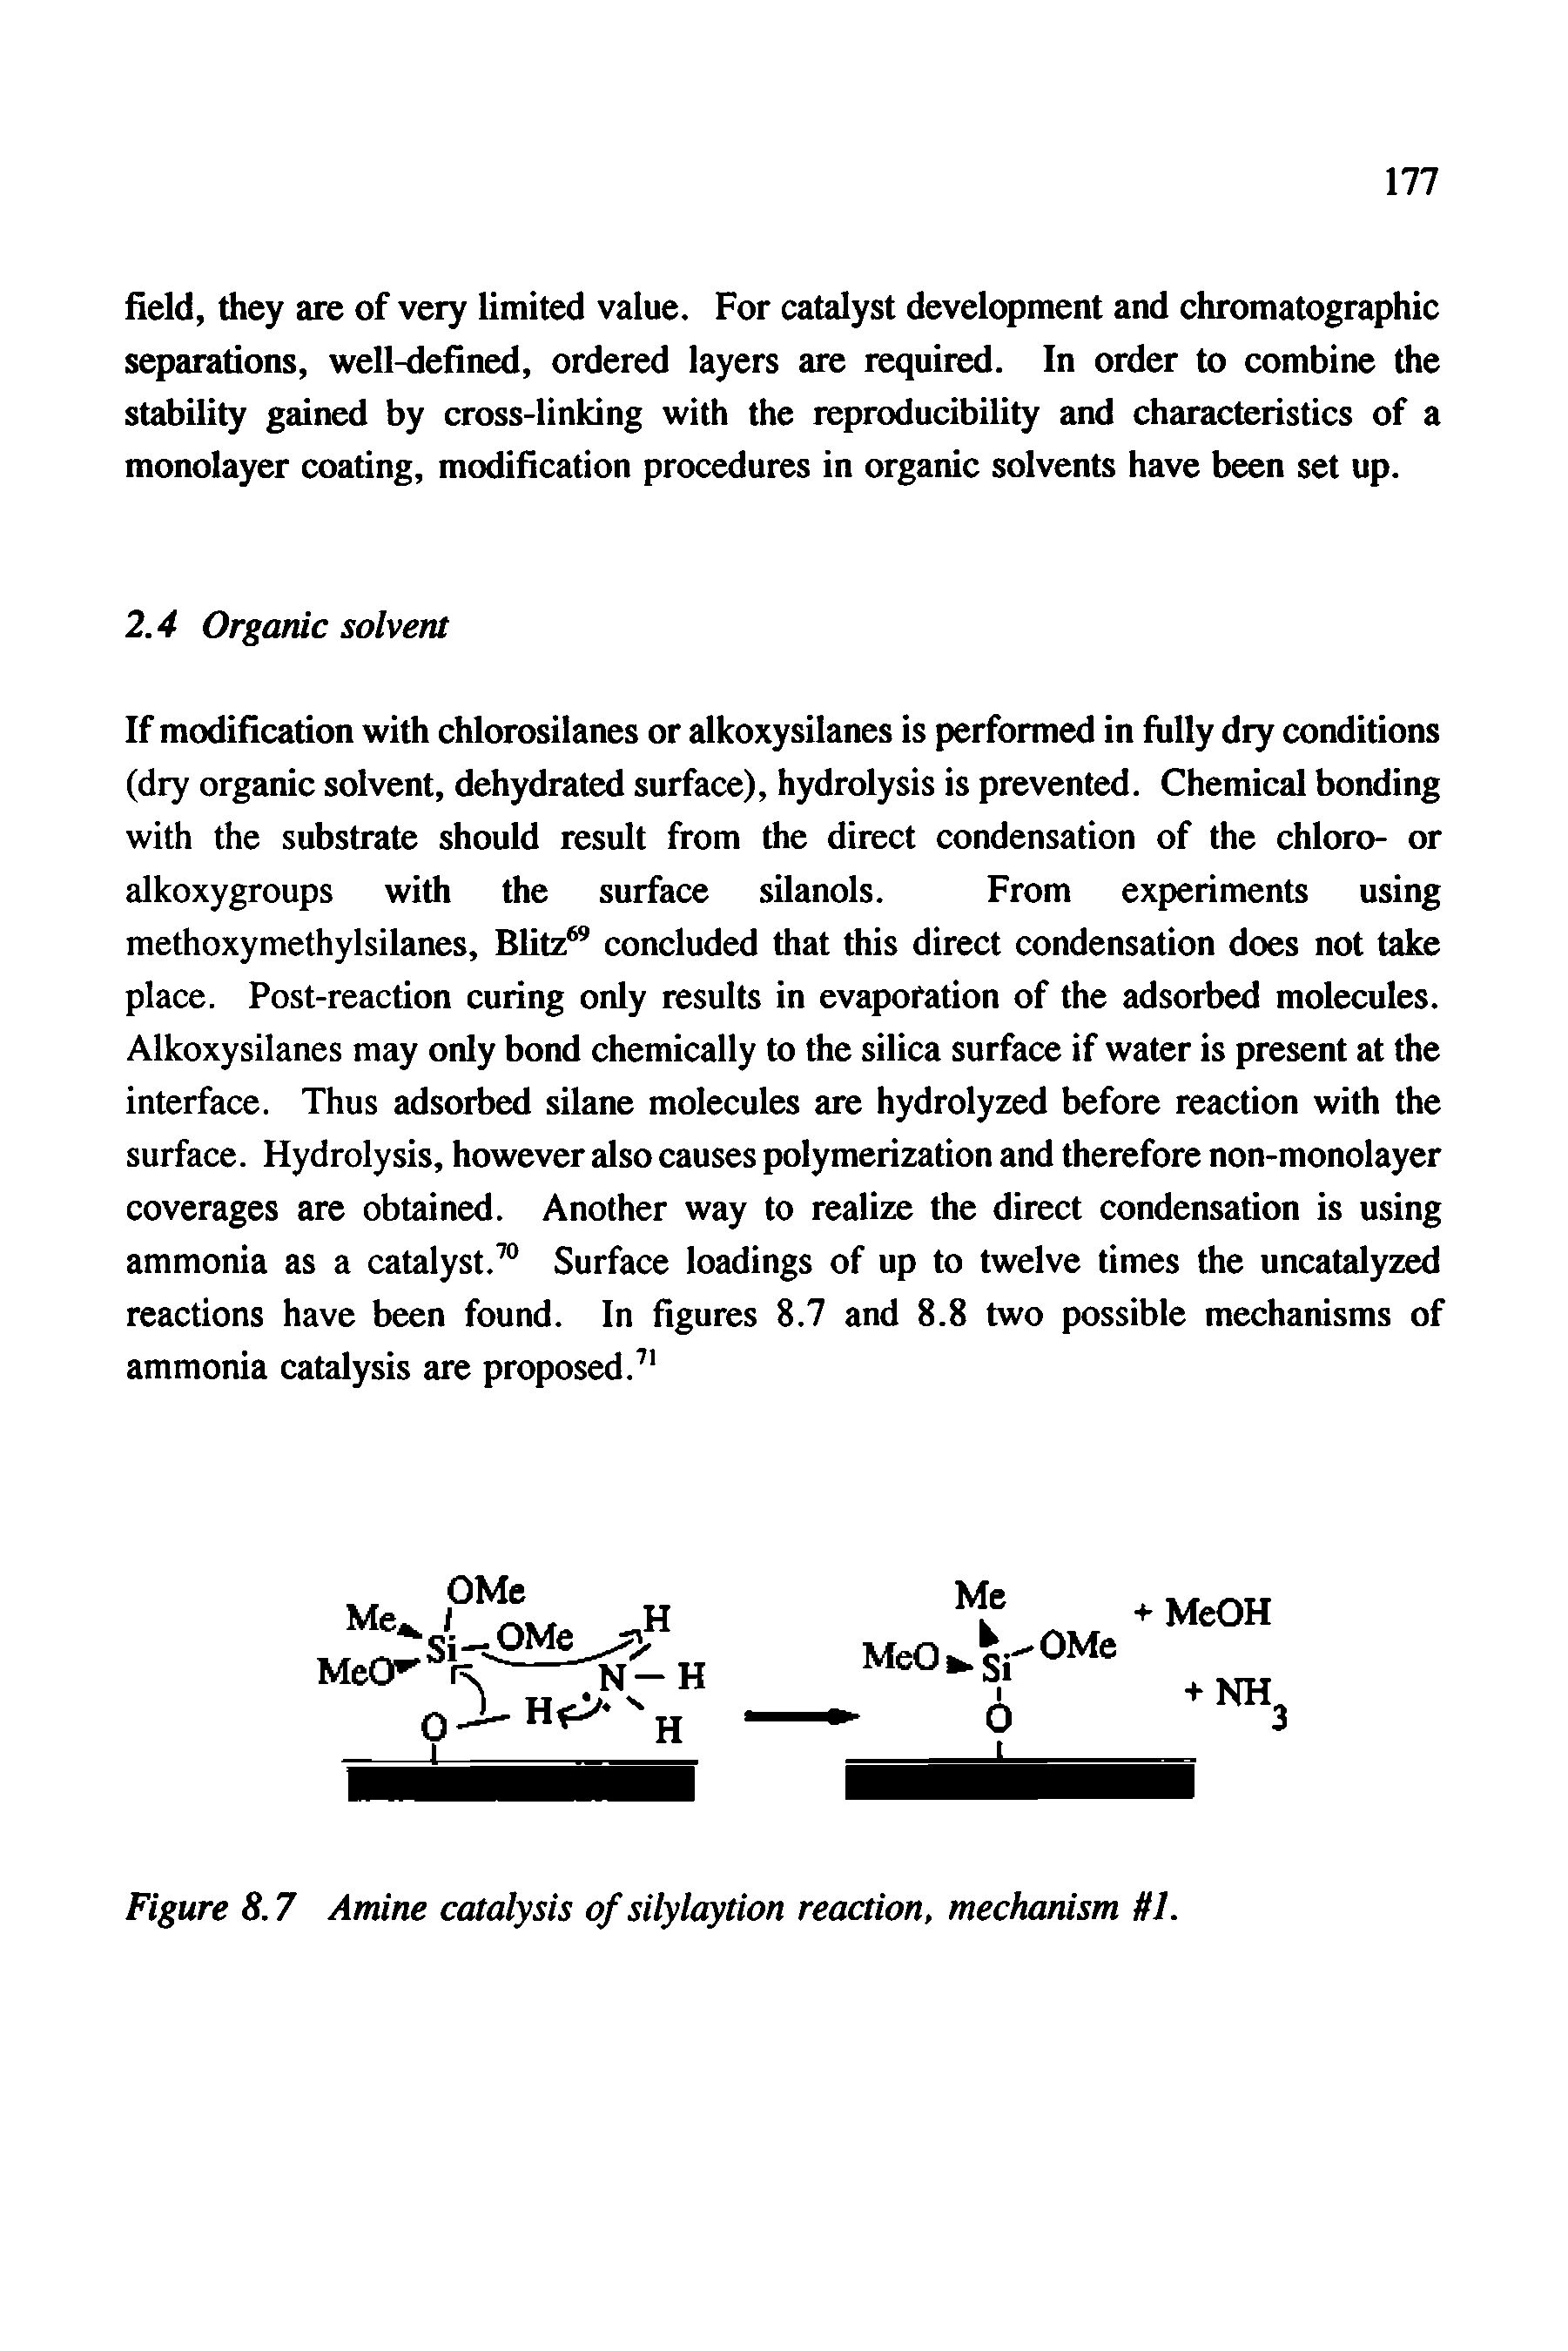 Figure 8.7 Amine catalysis of silylaytion reaction, mechanism HI.